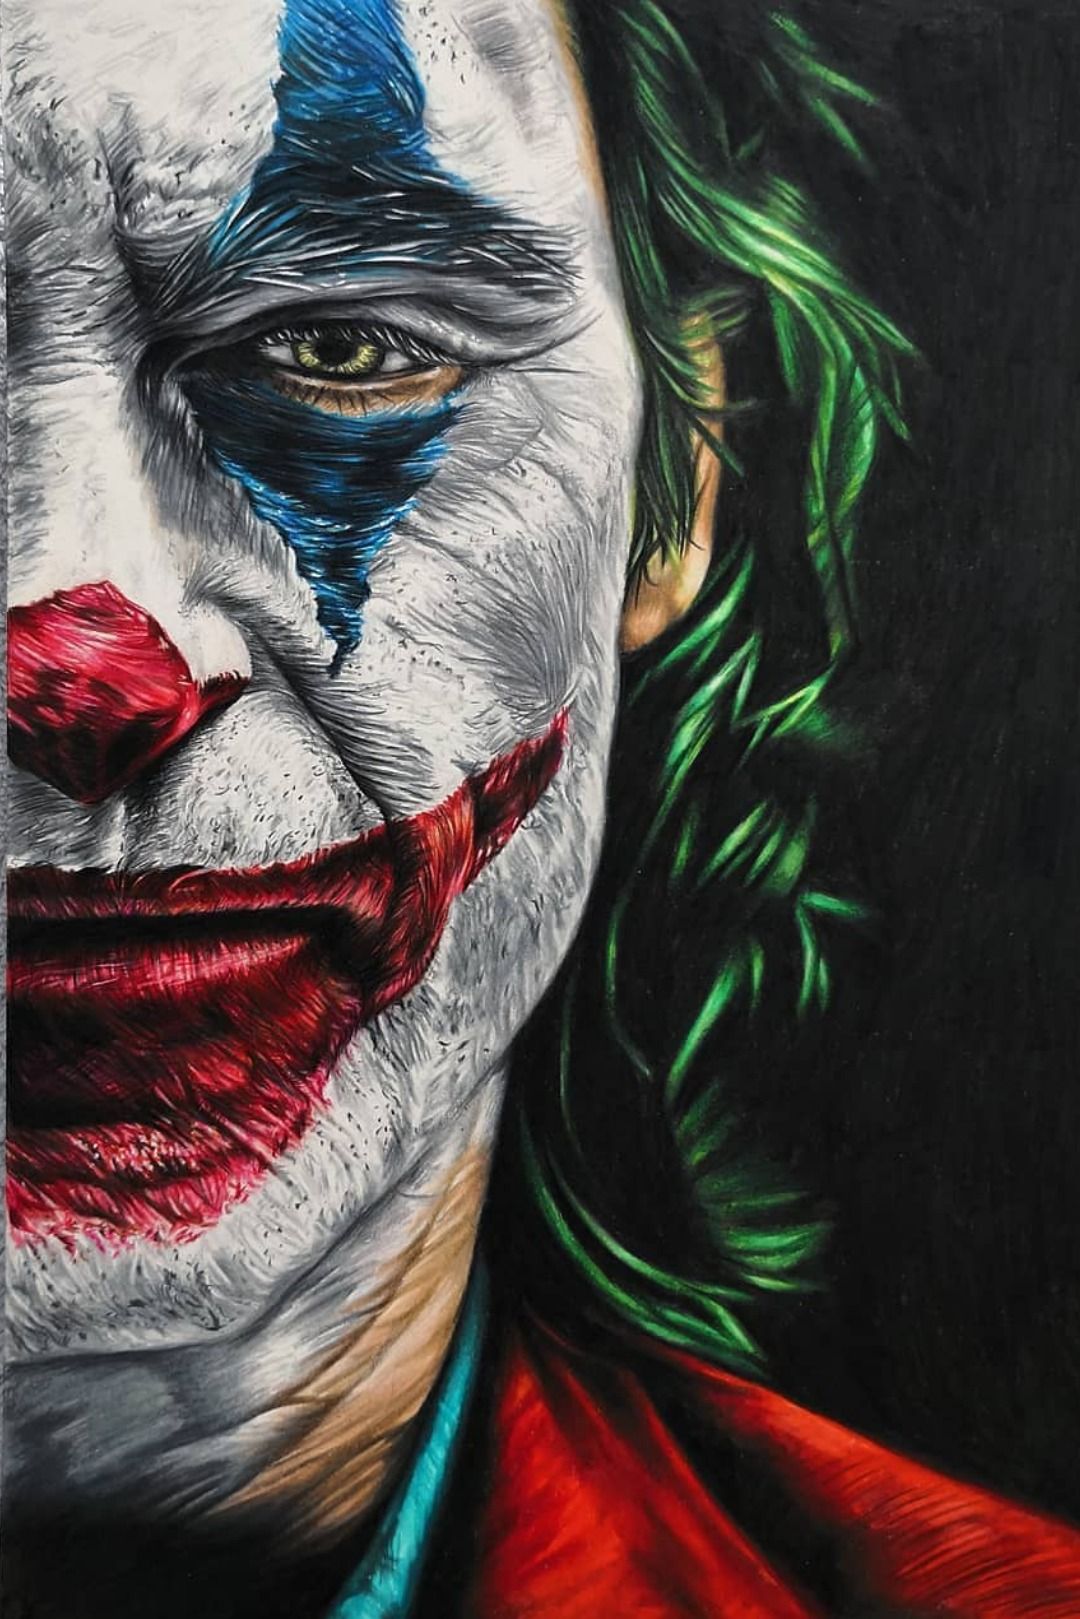 Funny Joker Pic Wallpapers